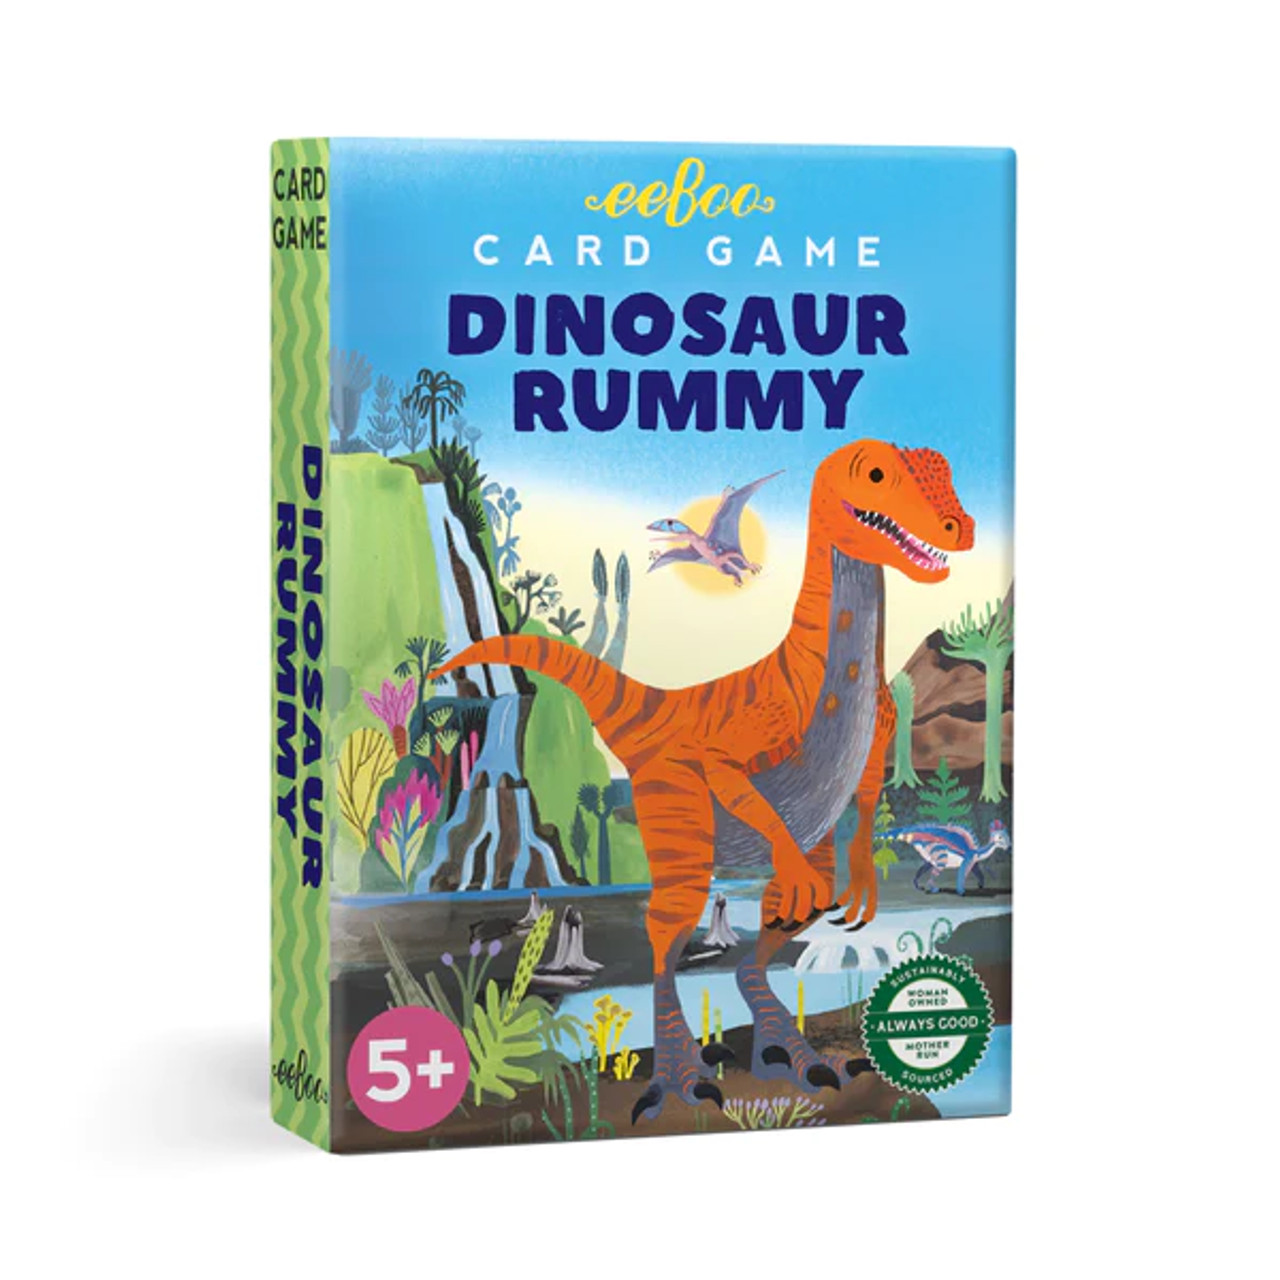 Dinosaur Rummy